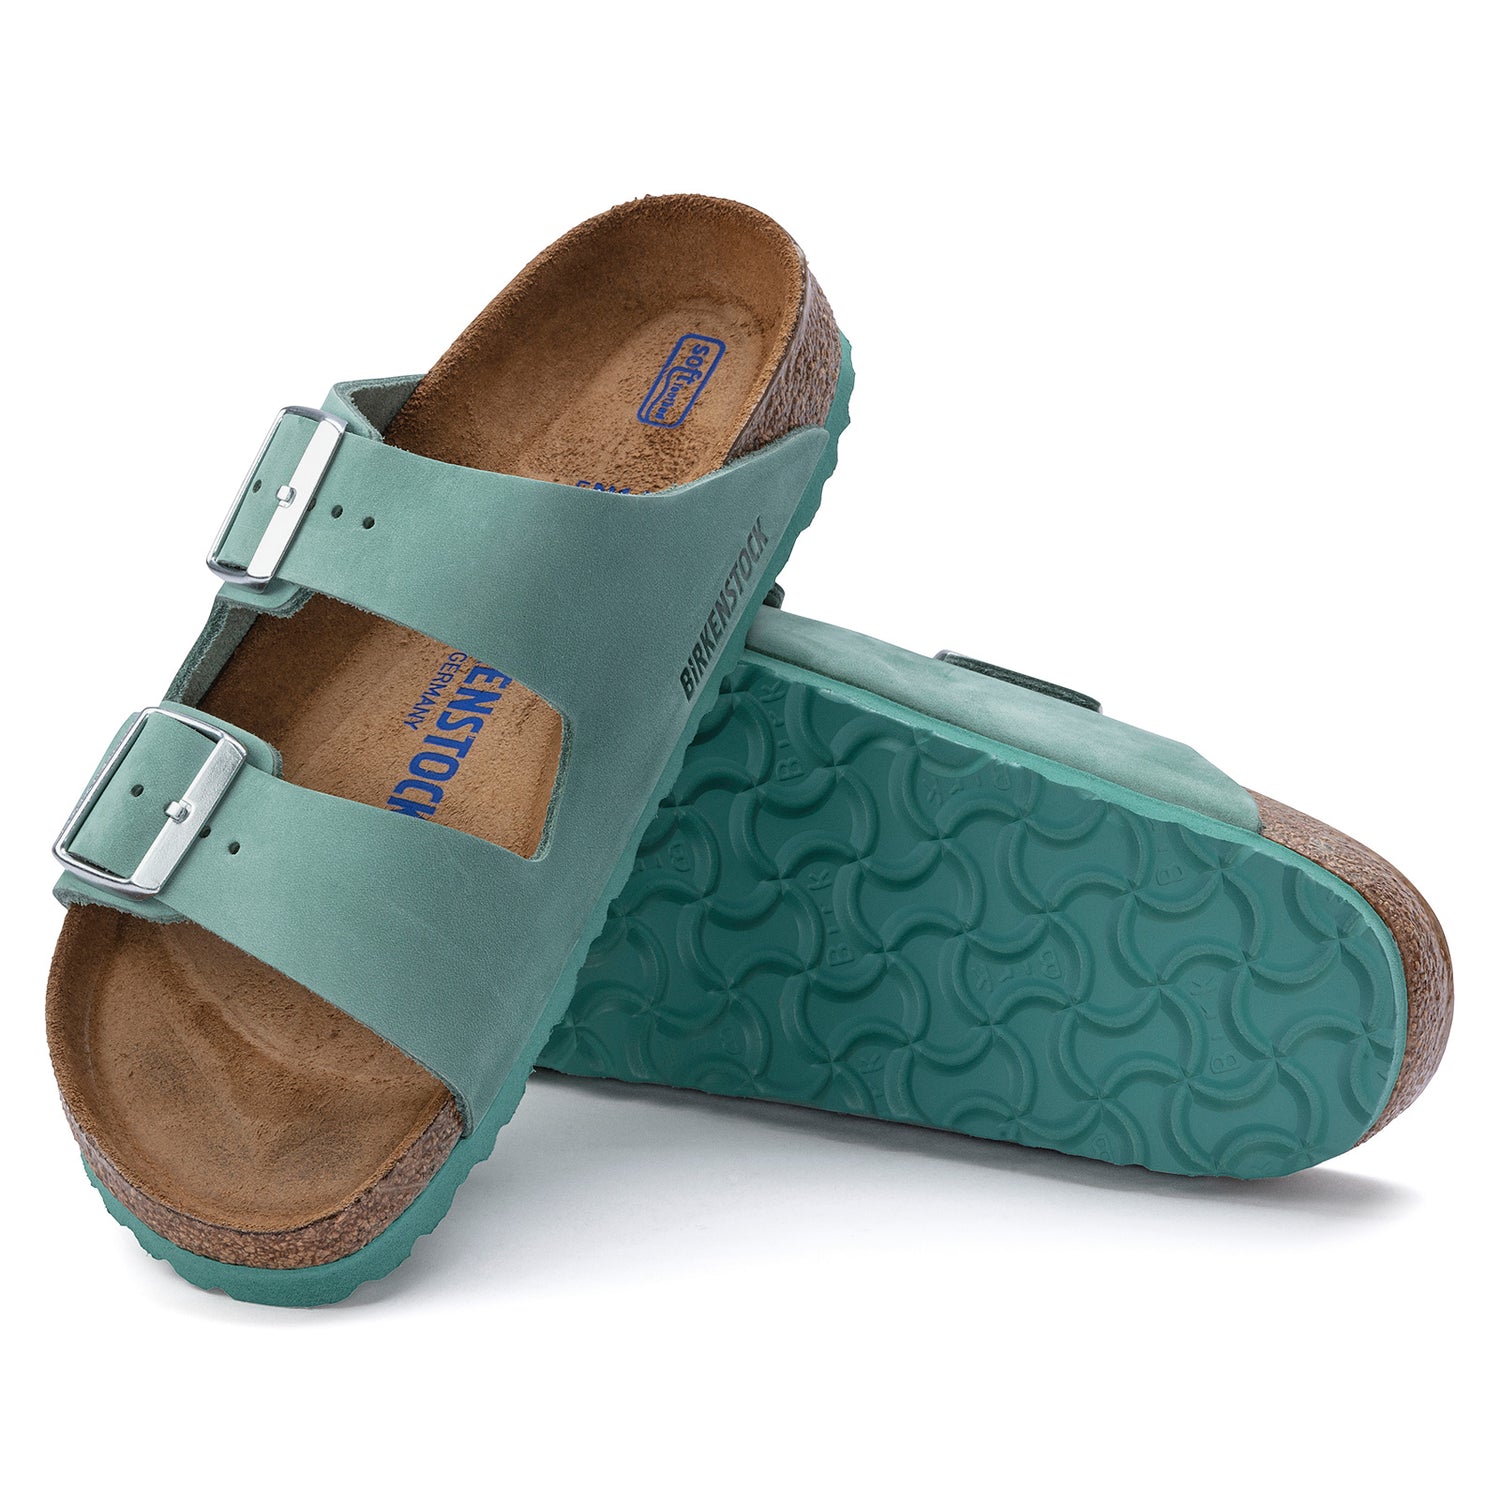 Peltz Shoes  Women's Birkenstock Arizona Soft Footbed Sandal - Narrow Width BERYL 1023 389 N